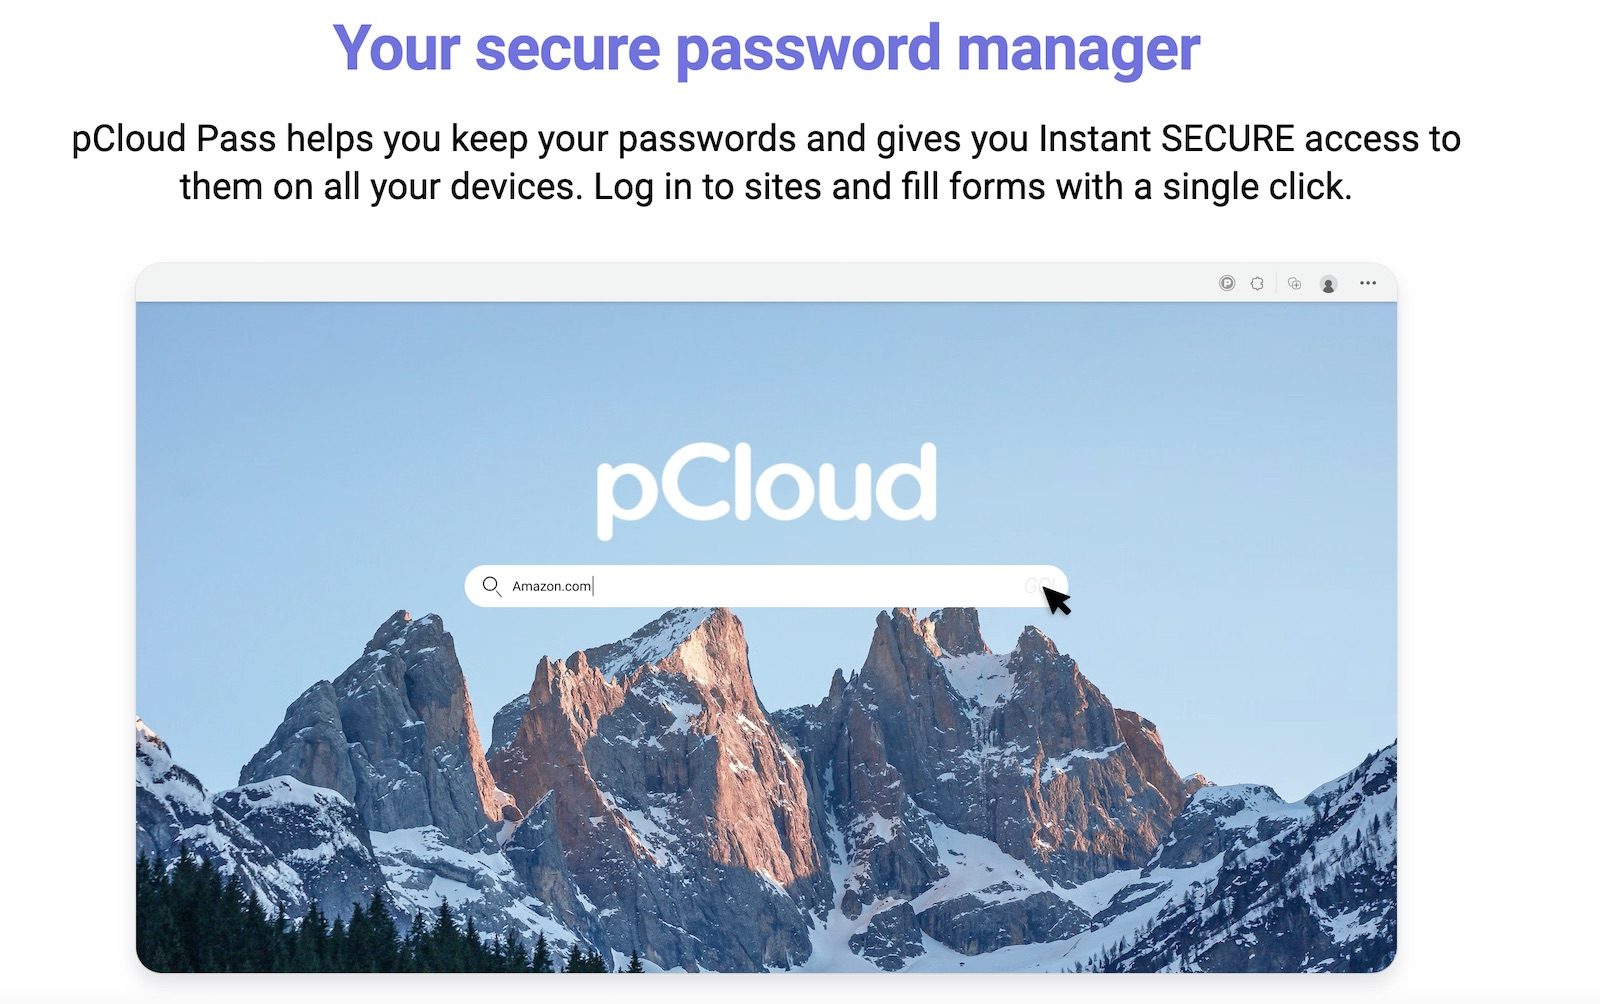 pCloud Pass manager password